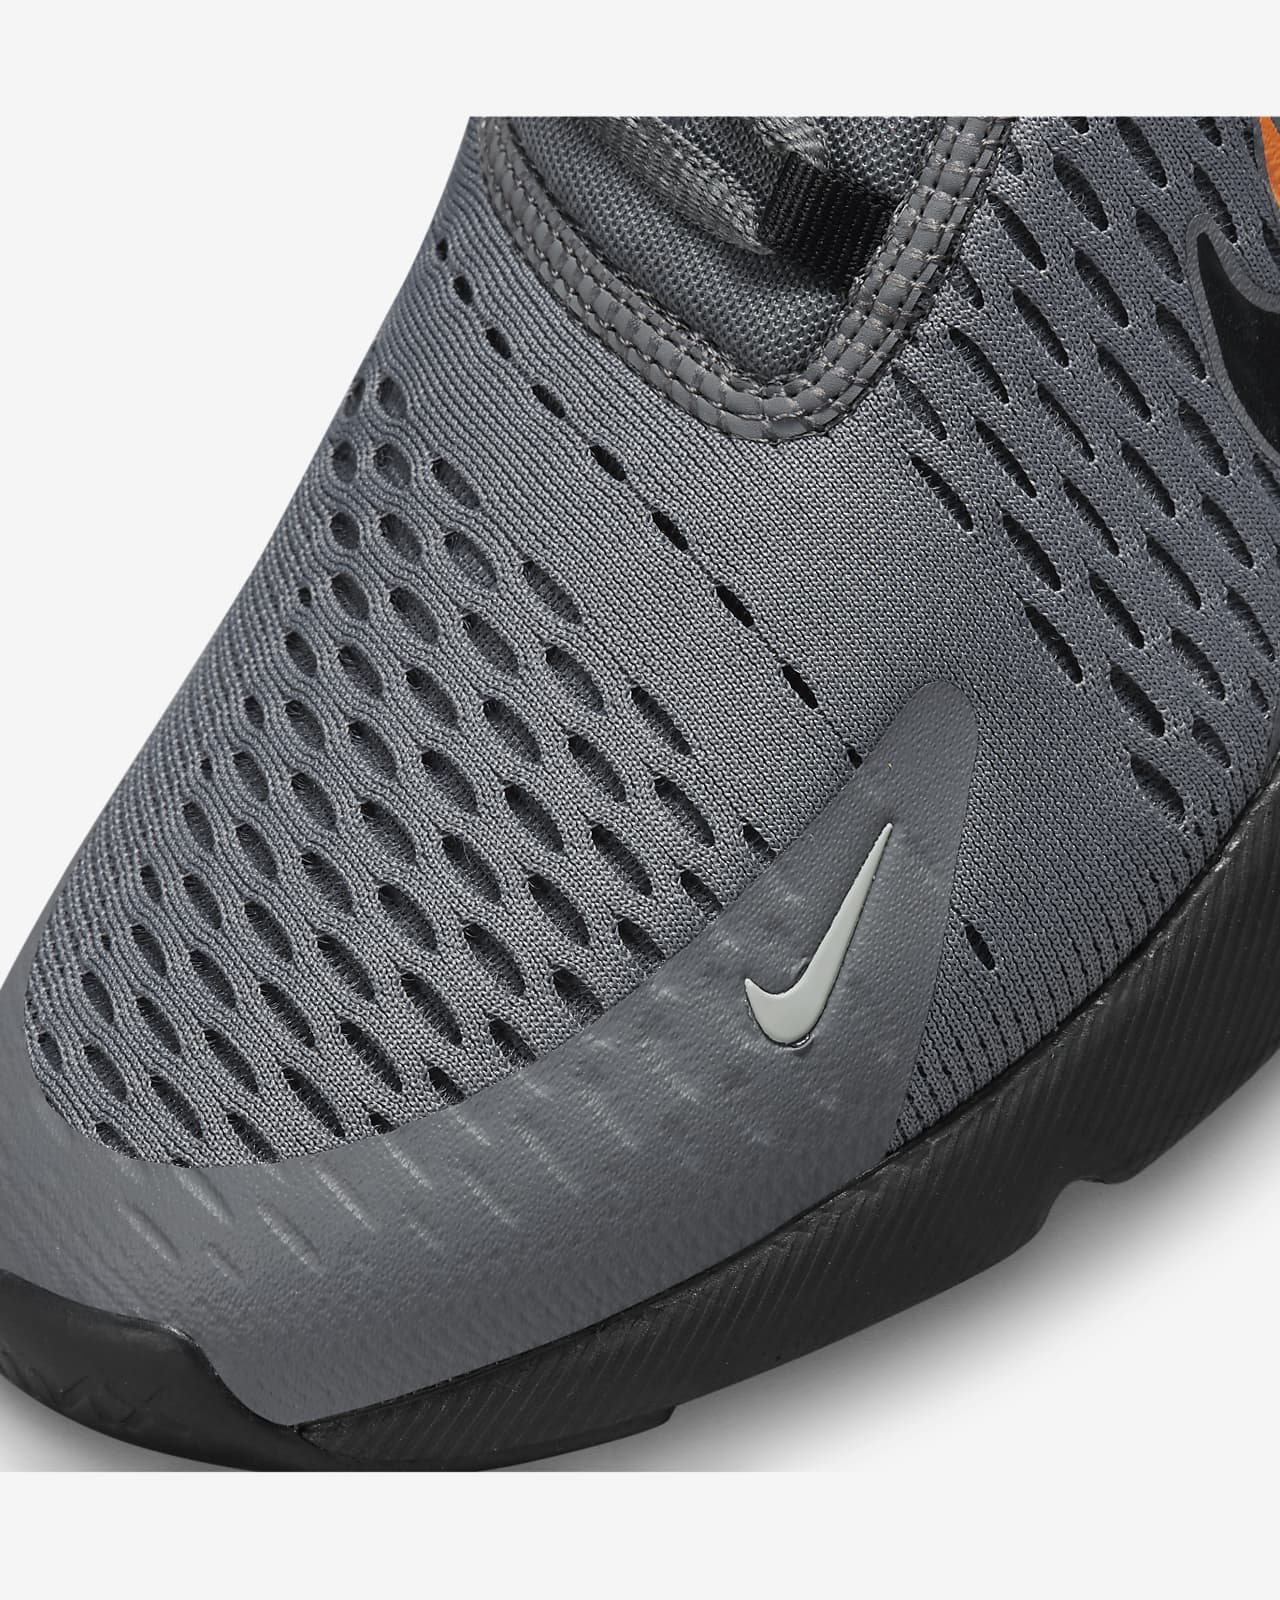 Nike Air Max 270 React Eng 'USA' Shoes - Size 7.5